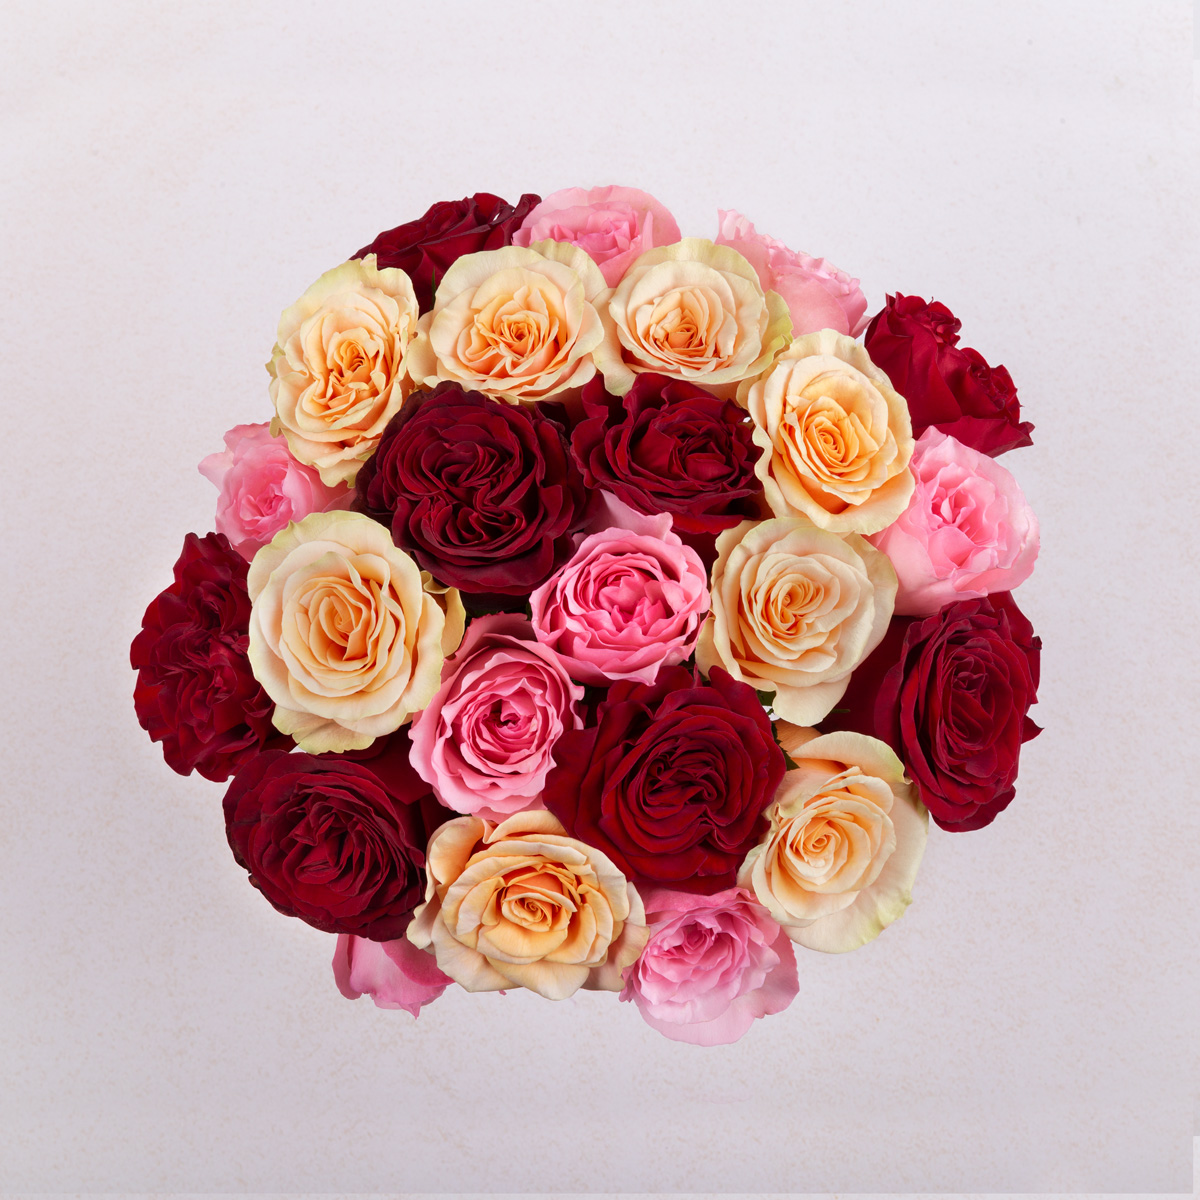 The Love Blush Bouquet